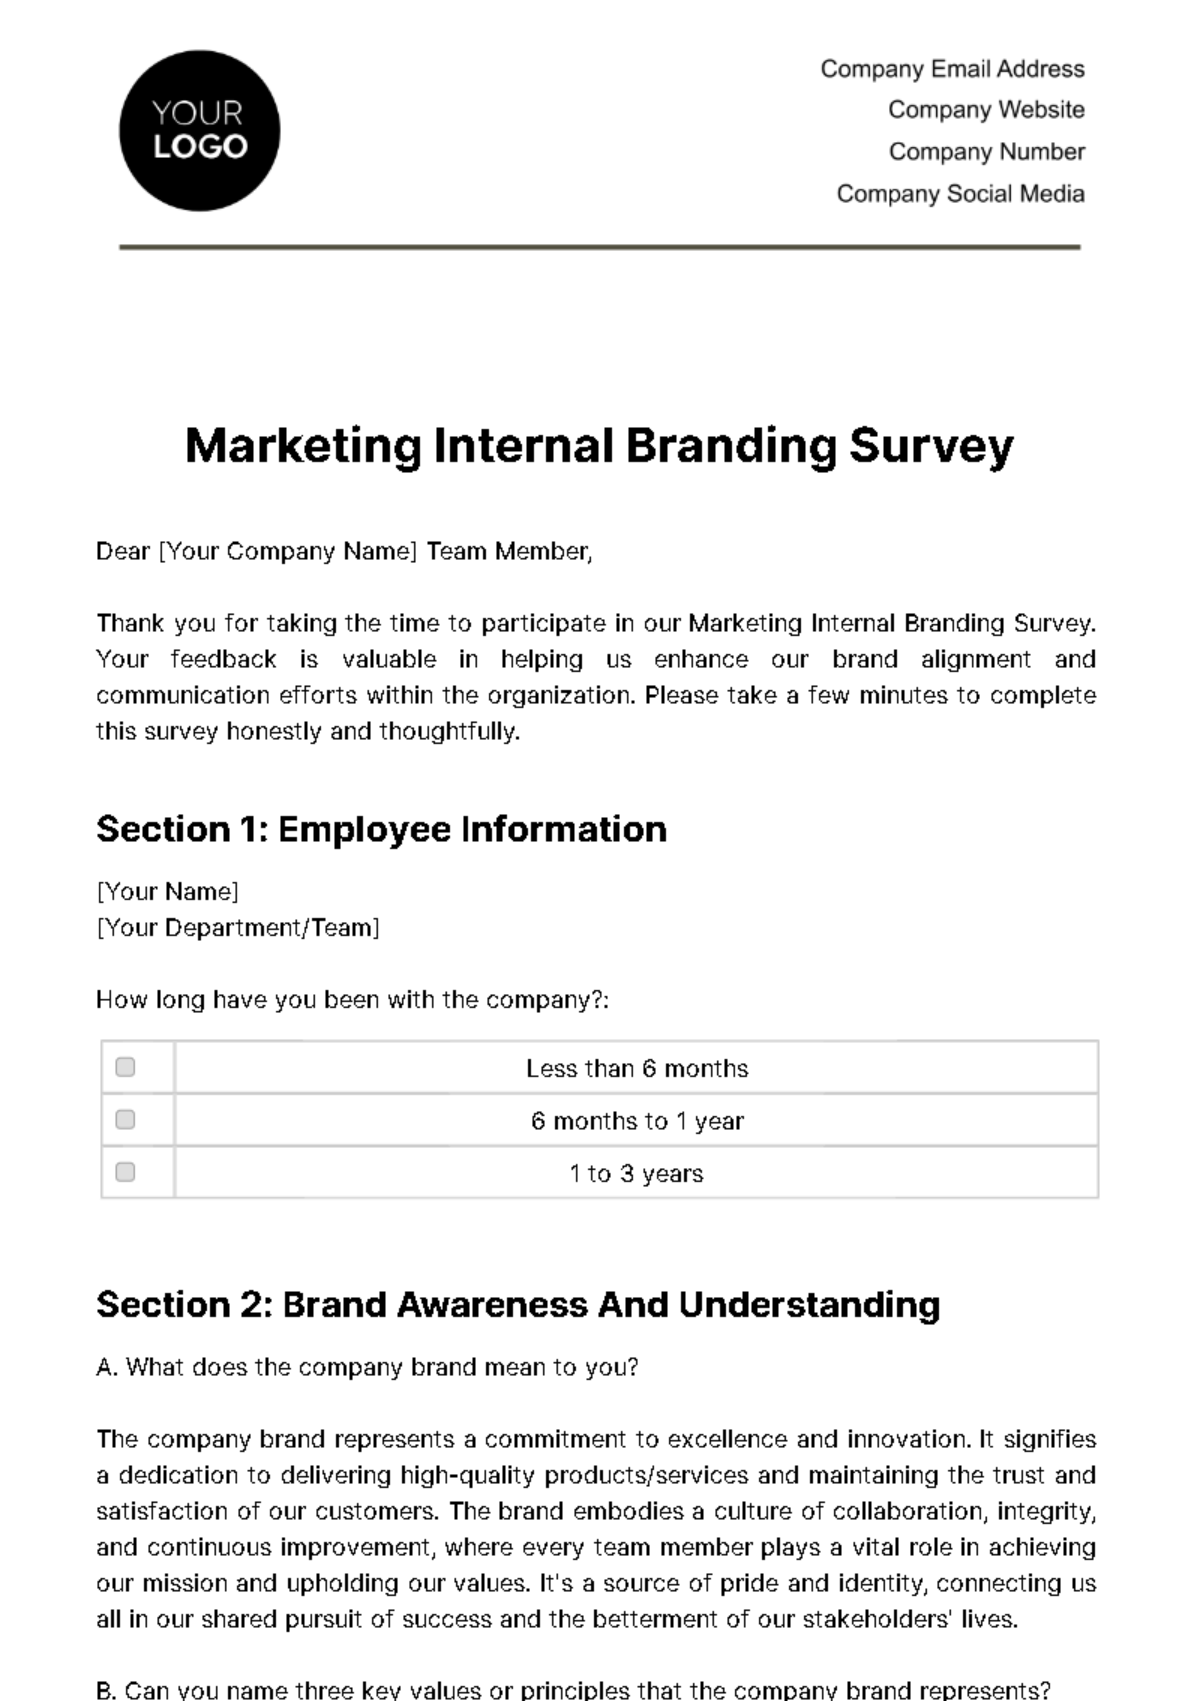 Free Marketing Internal Branding Survey Template